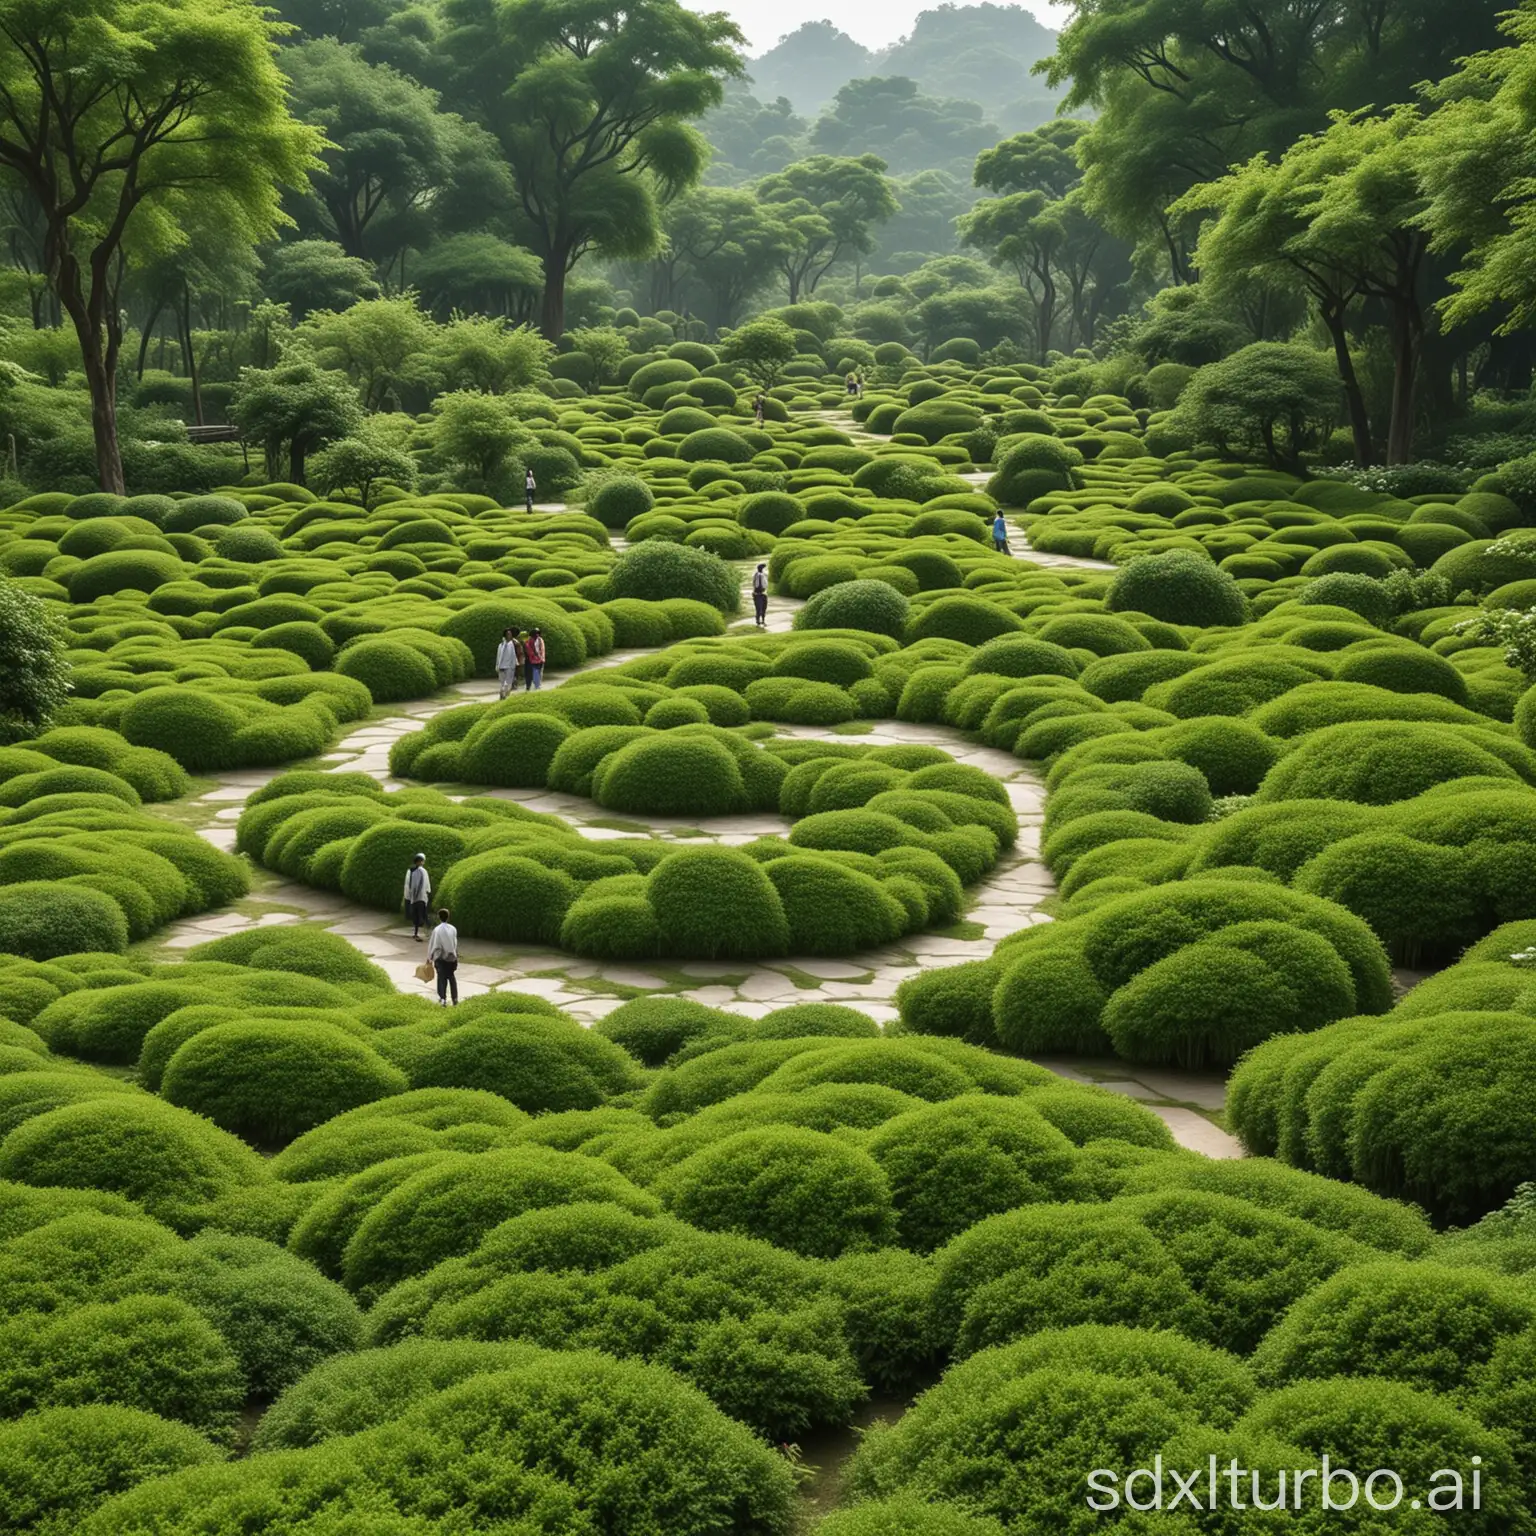 Surreal-3D-Landscape-People-Strolling-through-Chen-Zhen-Style-Garden